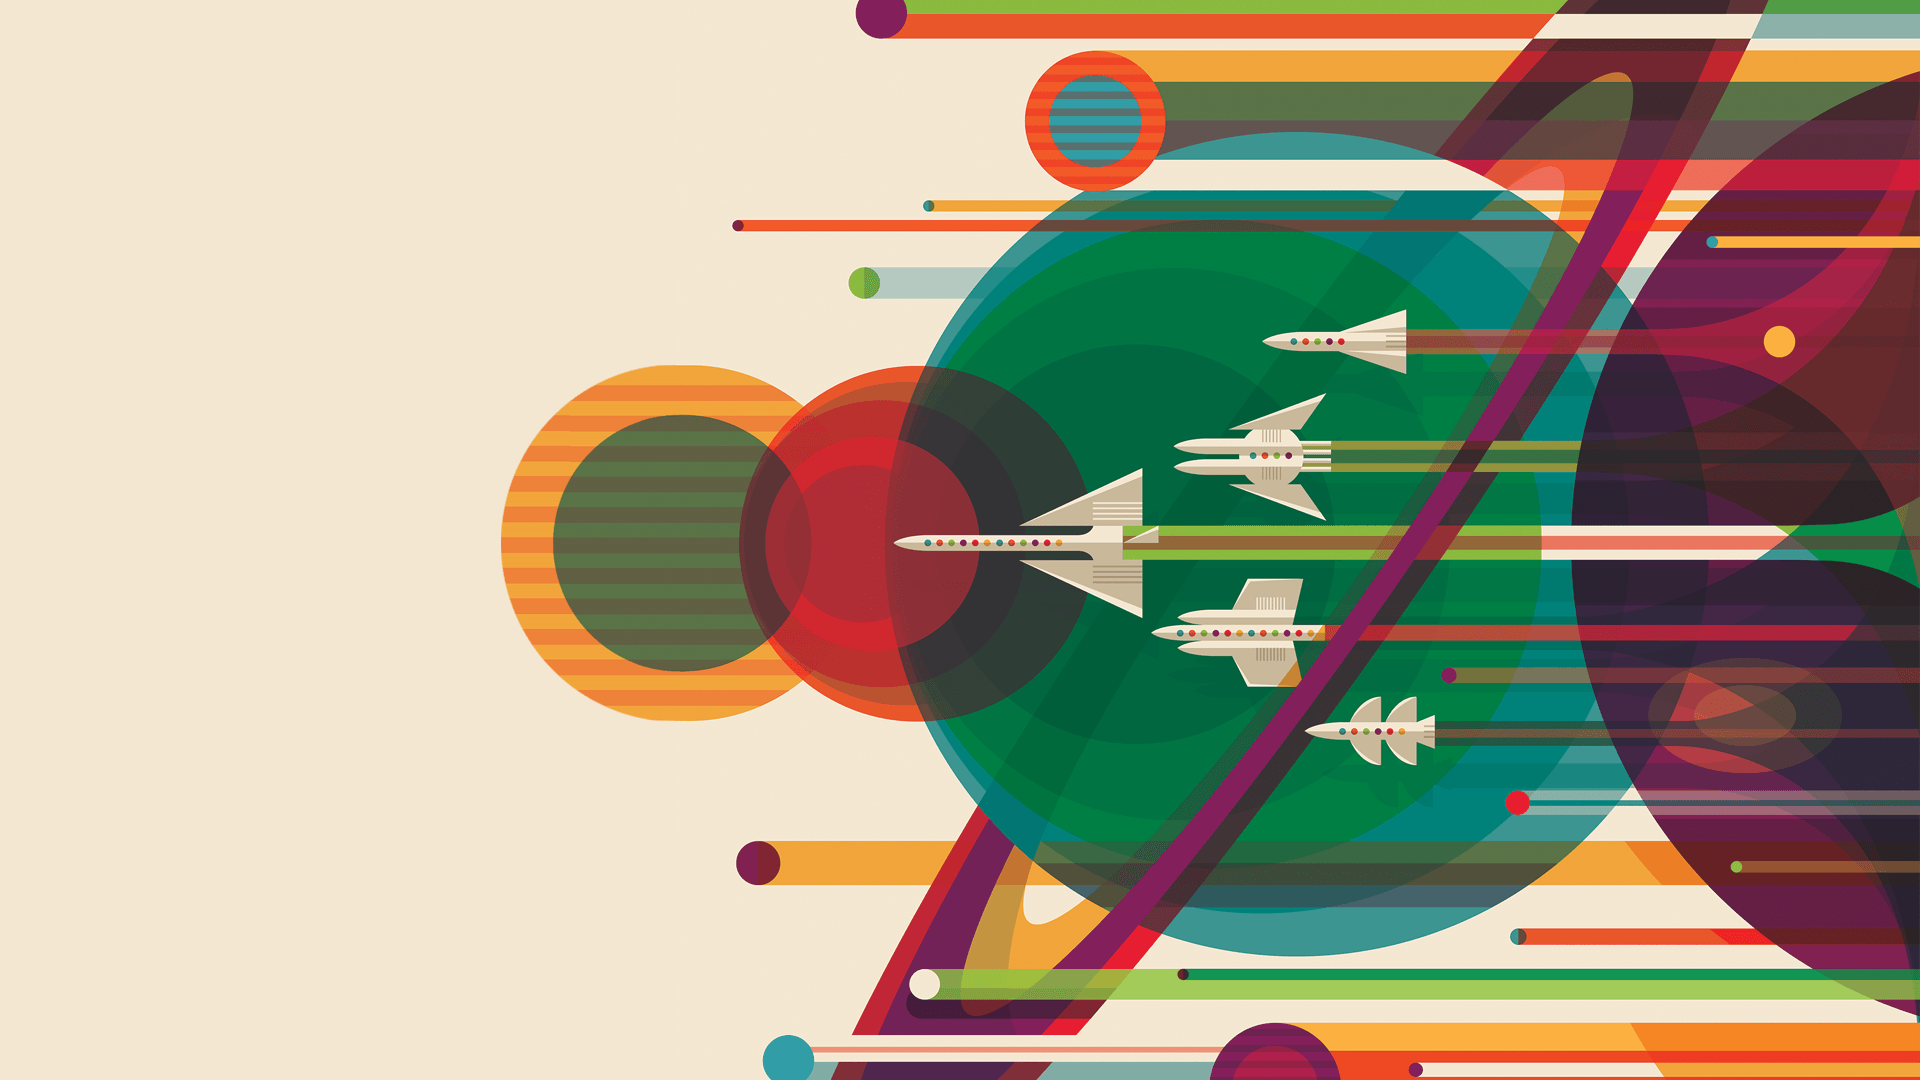 NASA's 'Great Tour' Poster as a Wallpaper! [1920x1080]